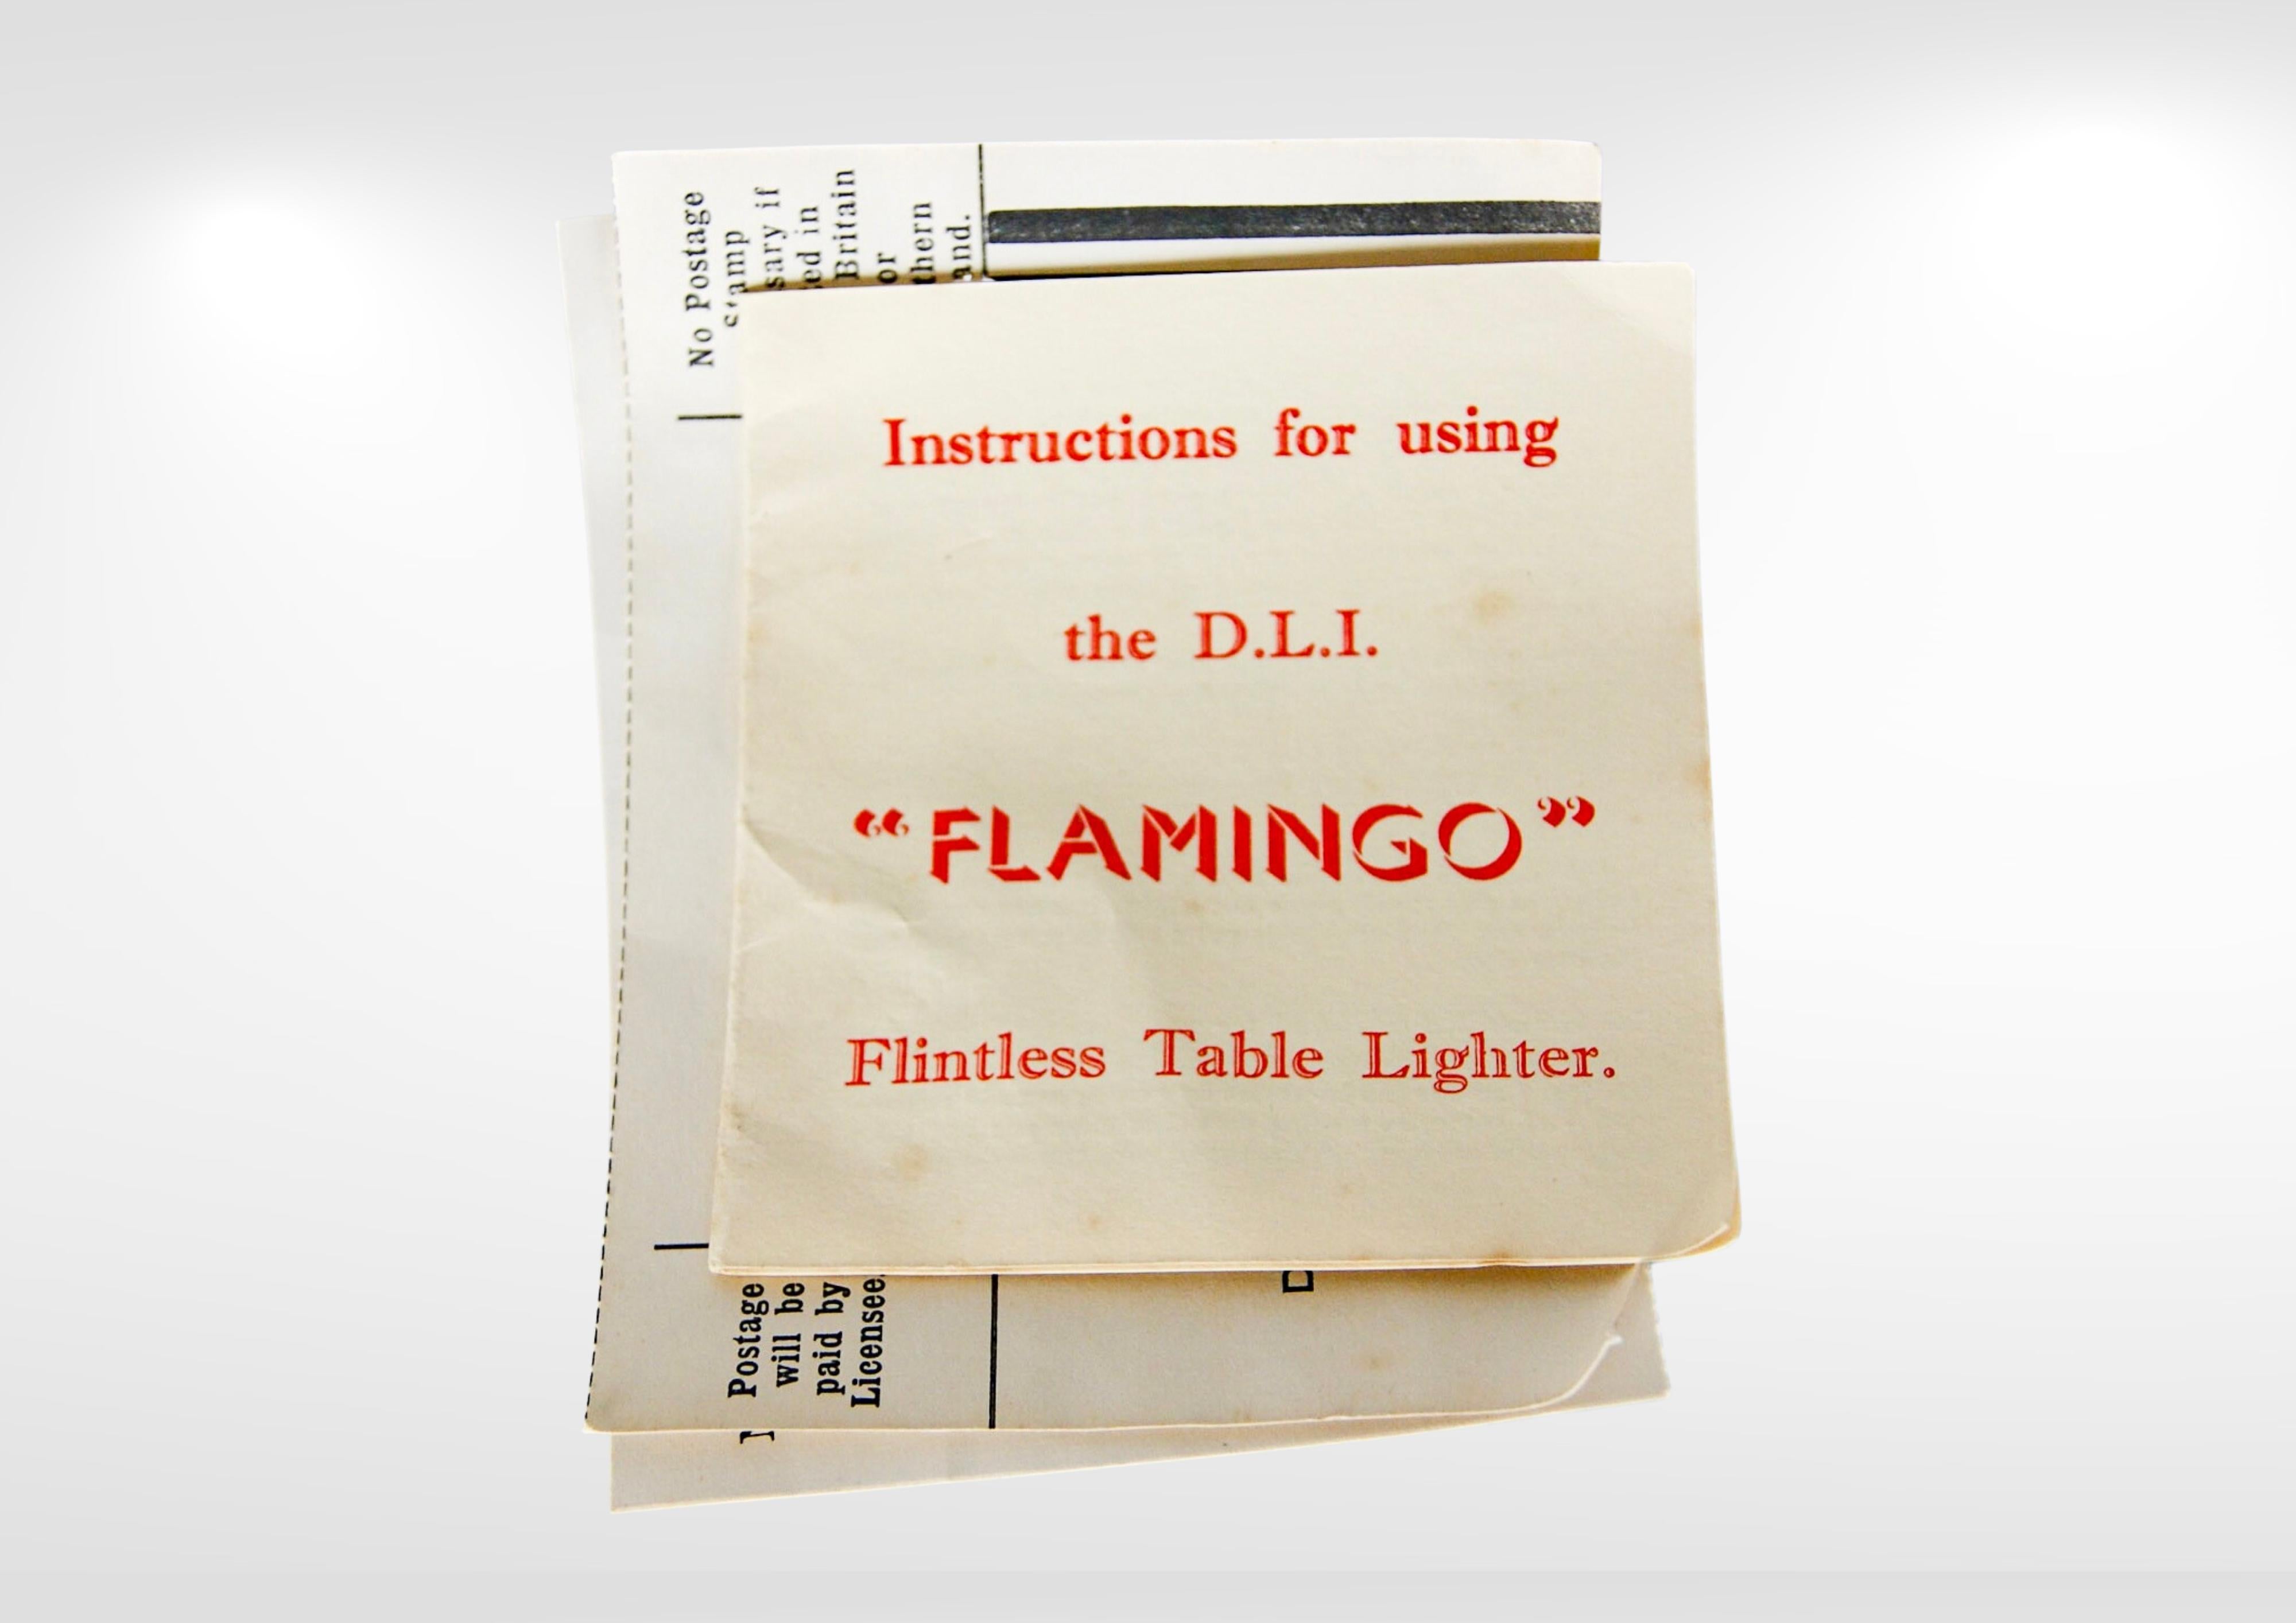 D.L.I Flamingo Bakelite Flintless Table Lighter, Circa 1950s unused & boxed For Sale 1